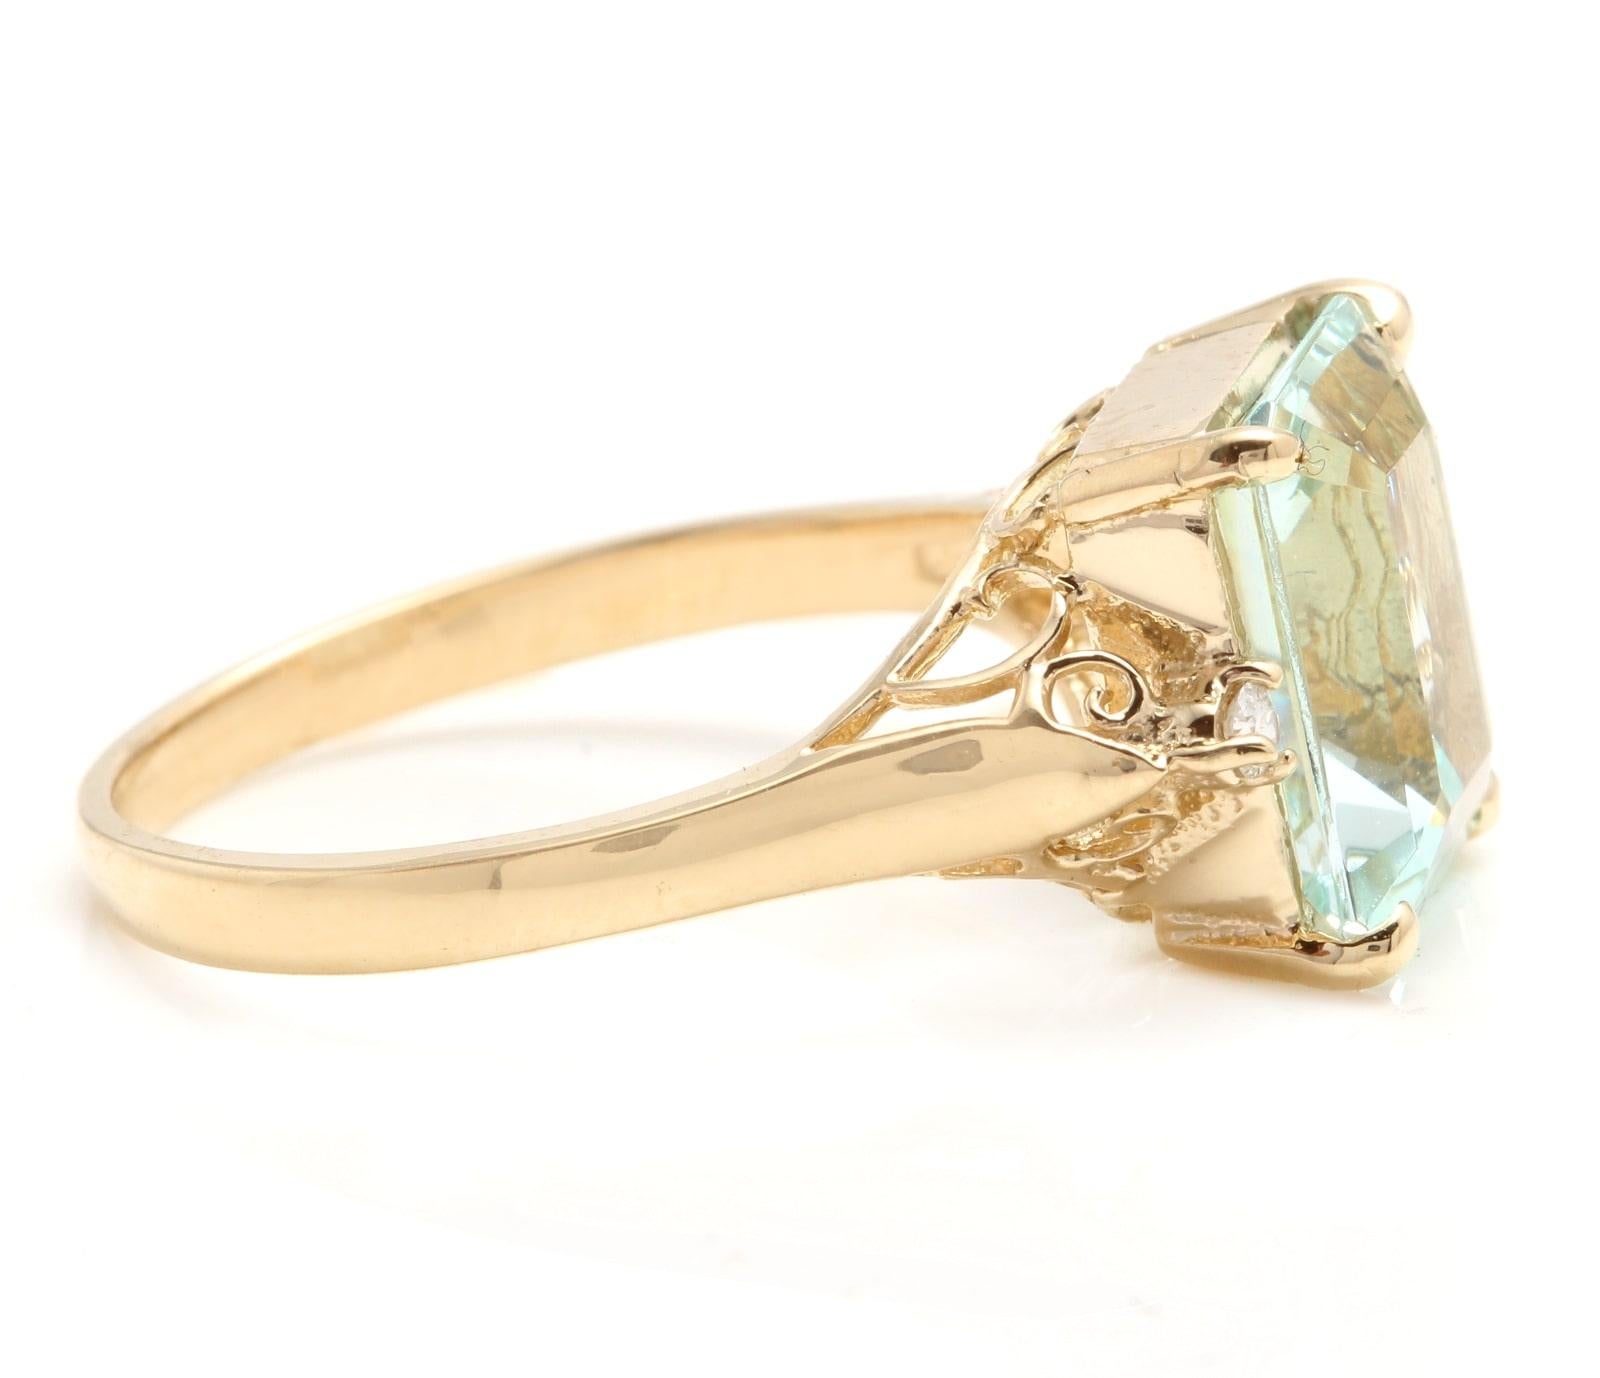 Mixed Cut 3.58 Carats Impressive Natural Aquamarine and Diamond 14K Yellow Gold Ring For Sale